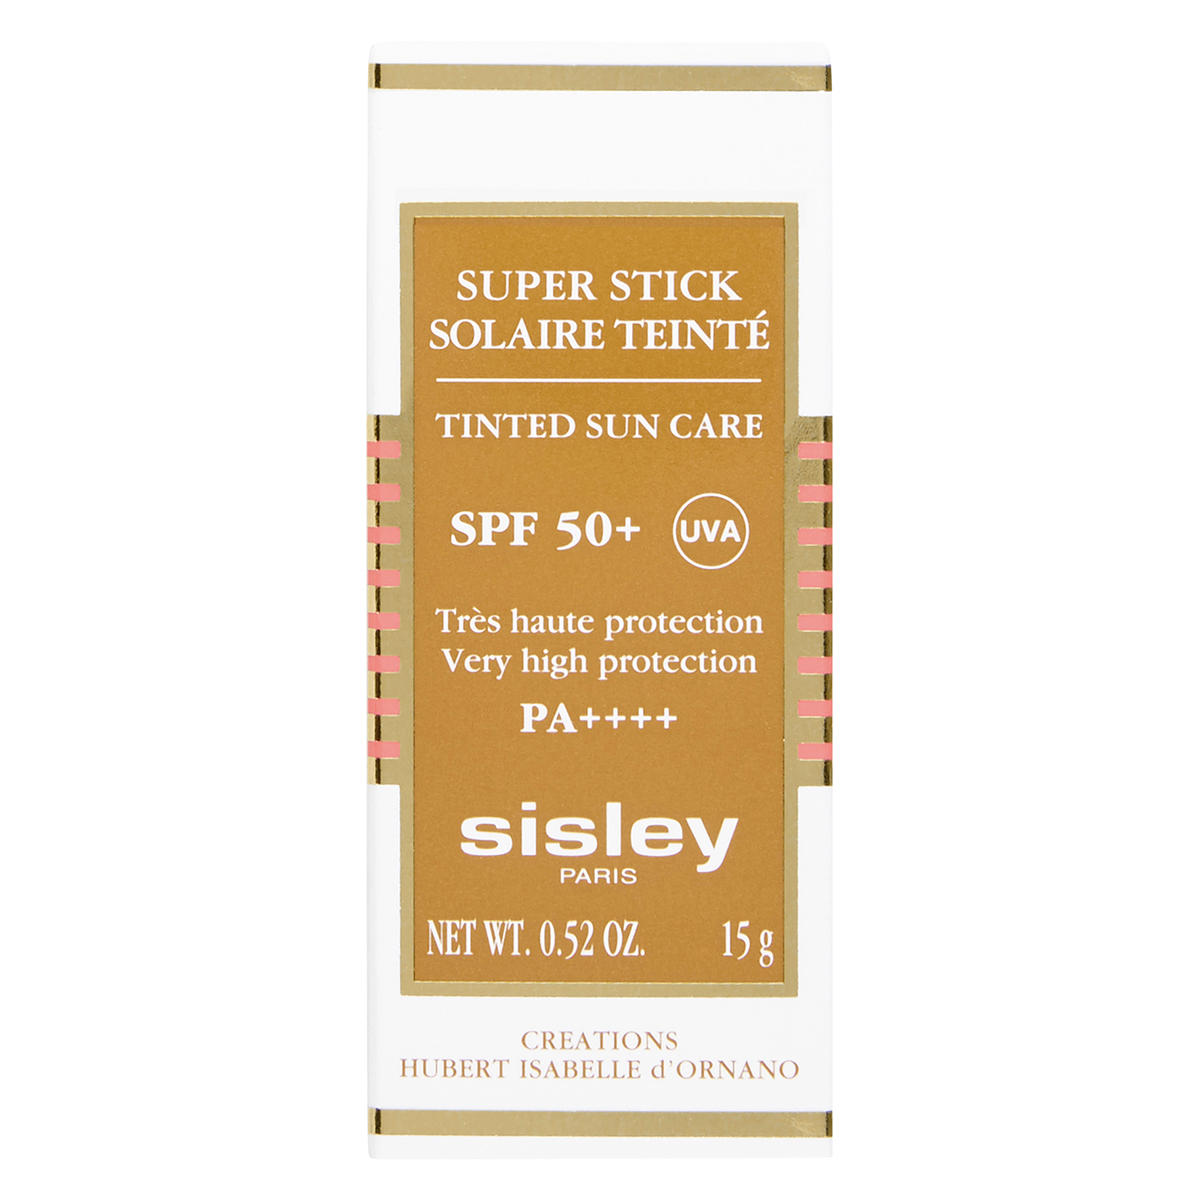 Sisley Paris Sunleÿa G.E. Super Stick Solaire Teinté SFP 50+ 15 g - 6